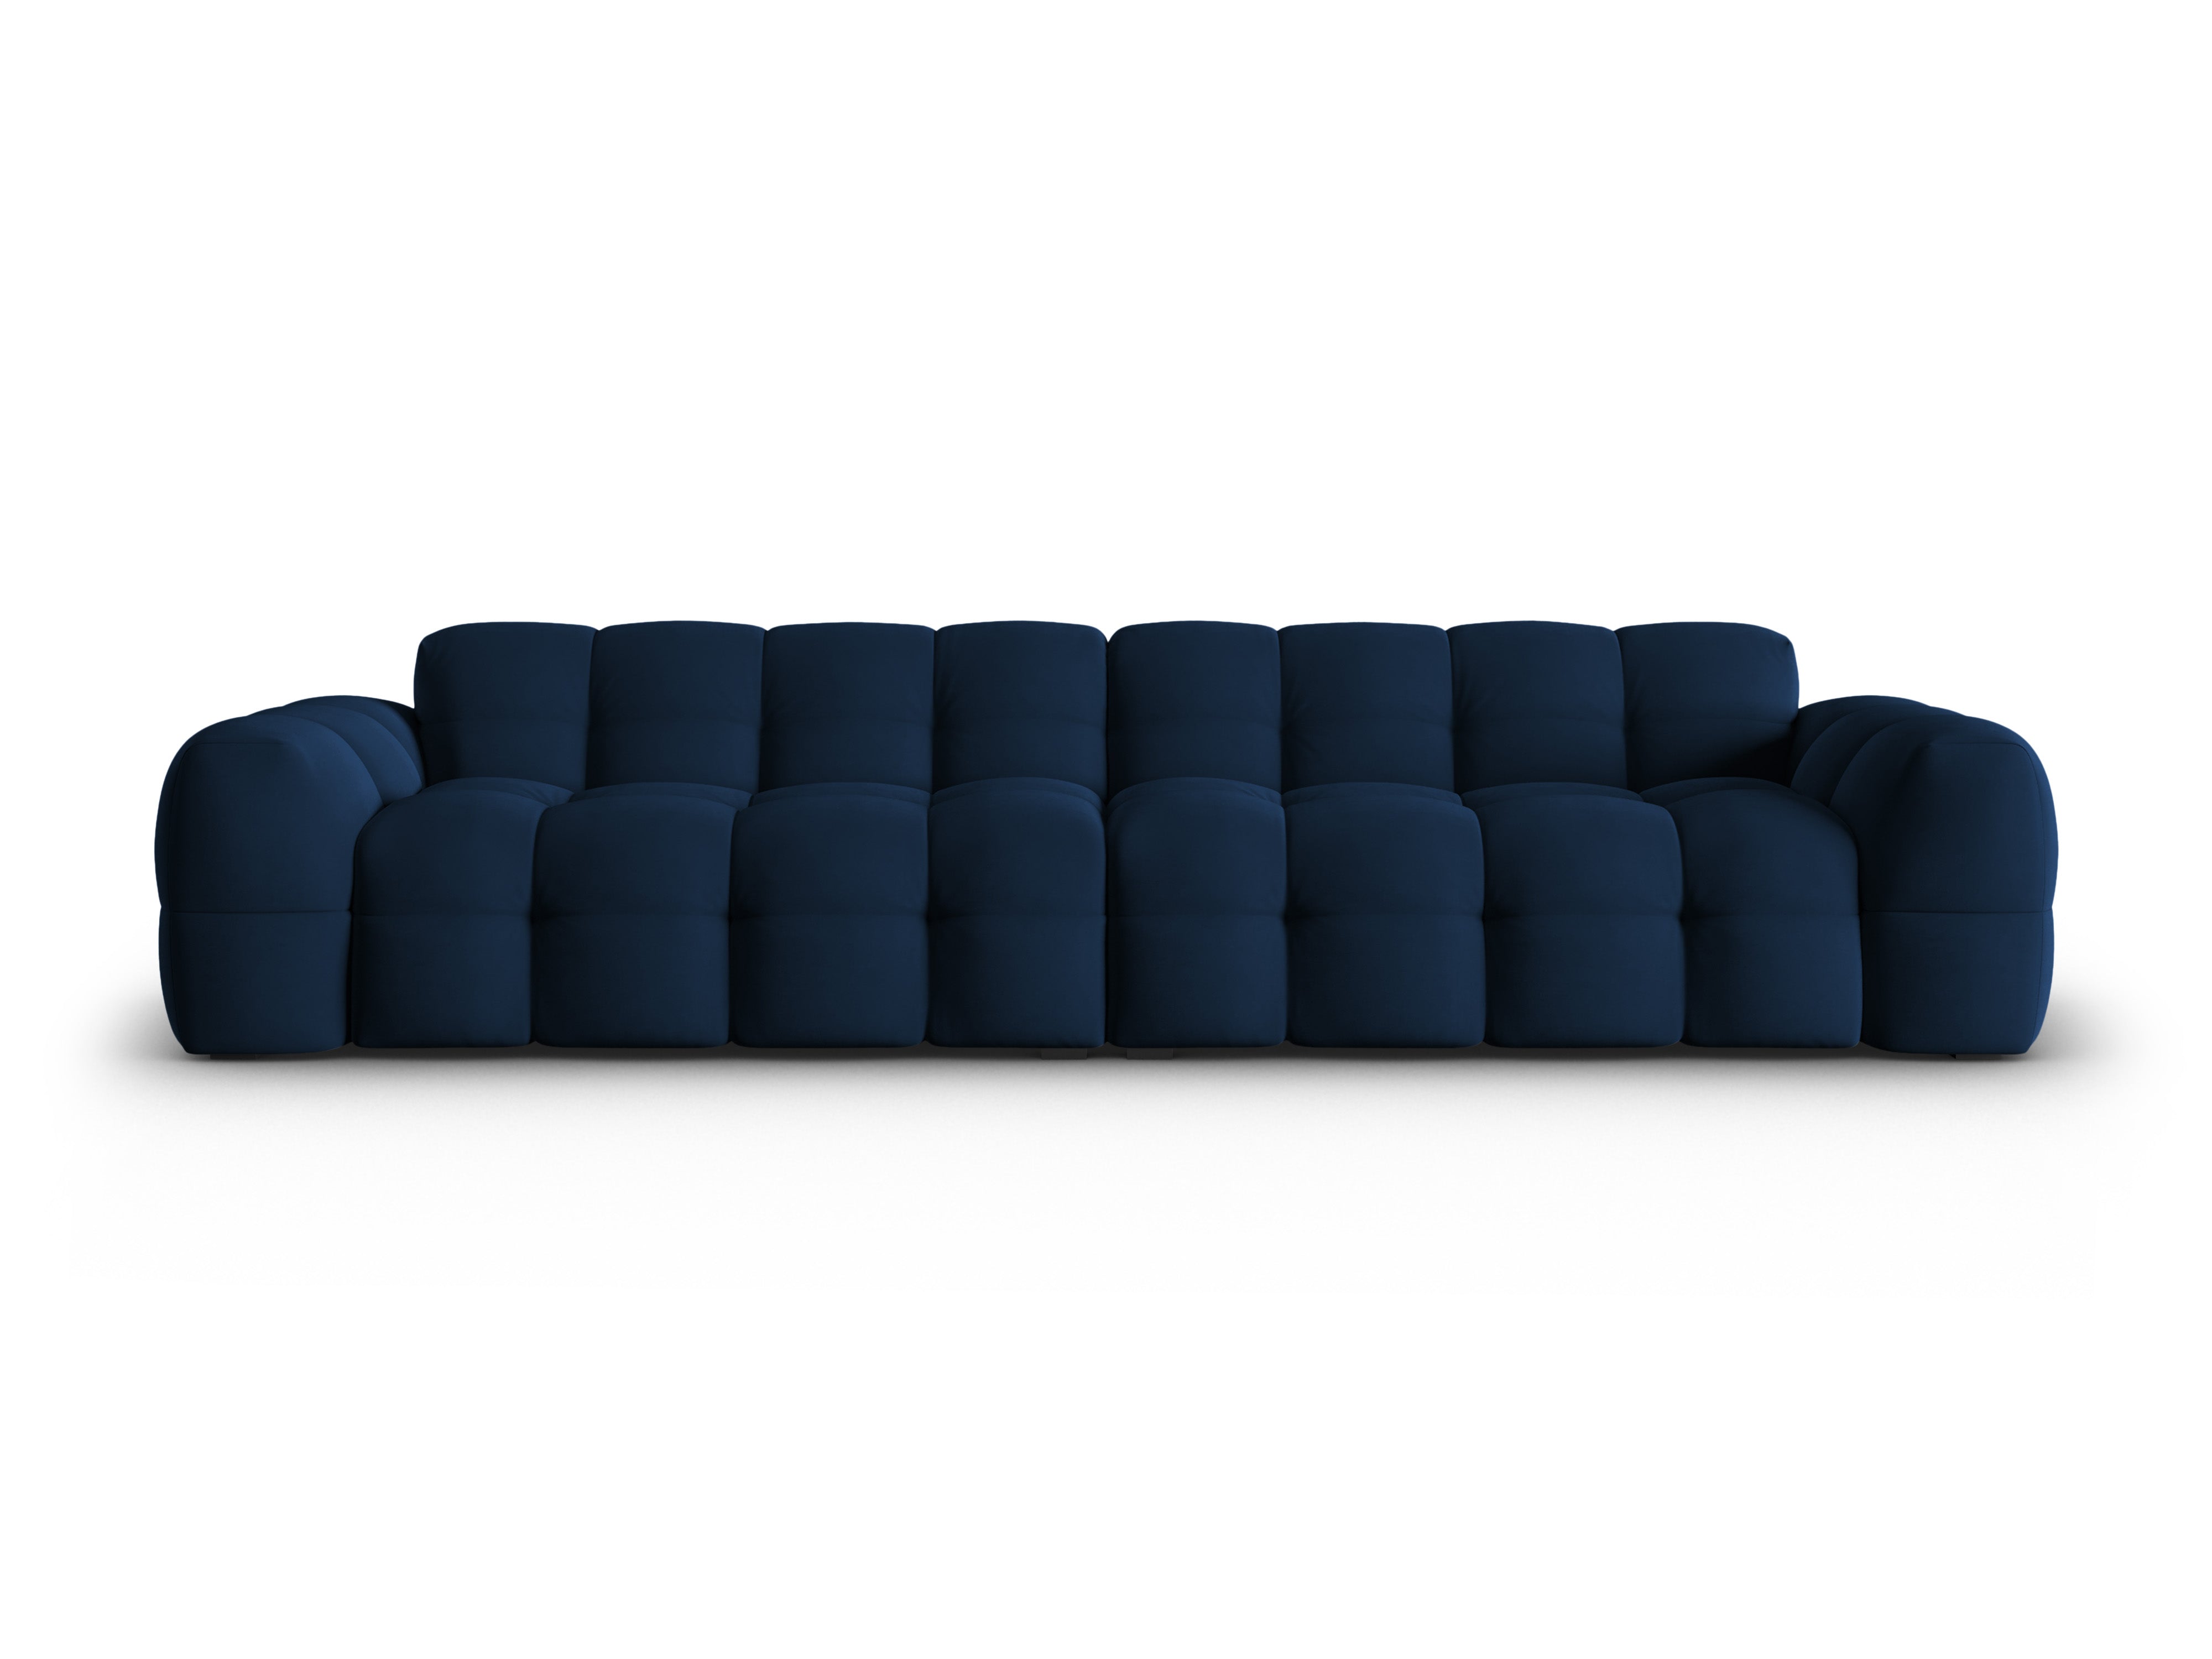 Velvet Sofa, "Nino", 4 Seats, 282x105x68
Made in Europe, Maison Heritage, Eye on Design